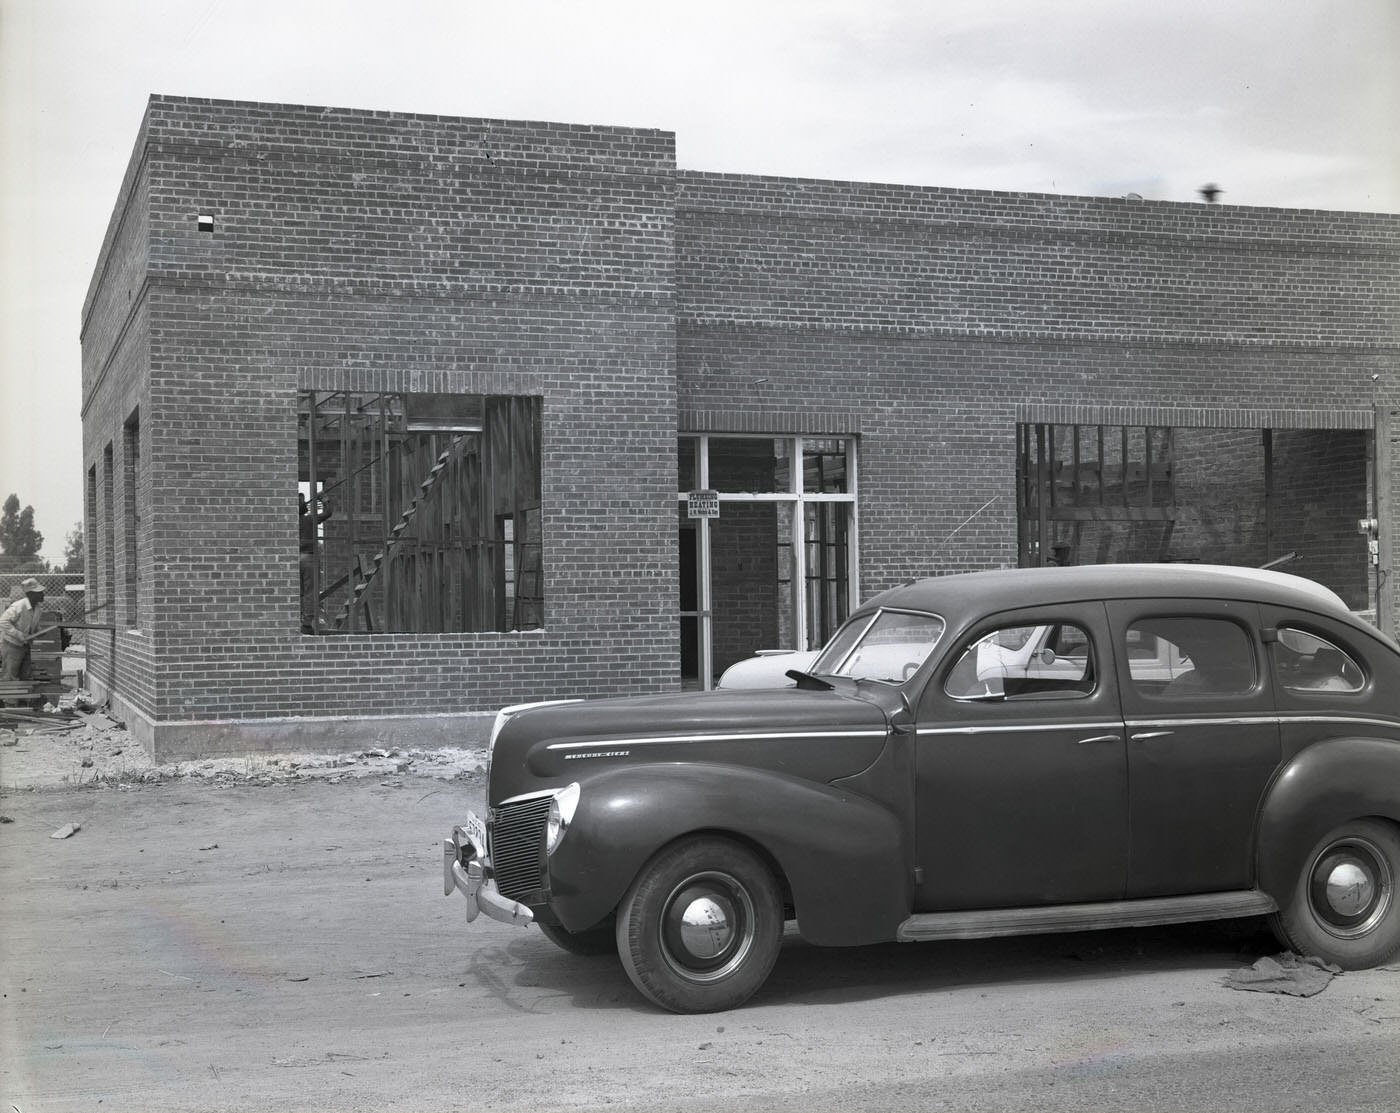 Building Exterior and Car, 1945